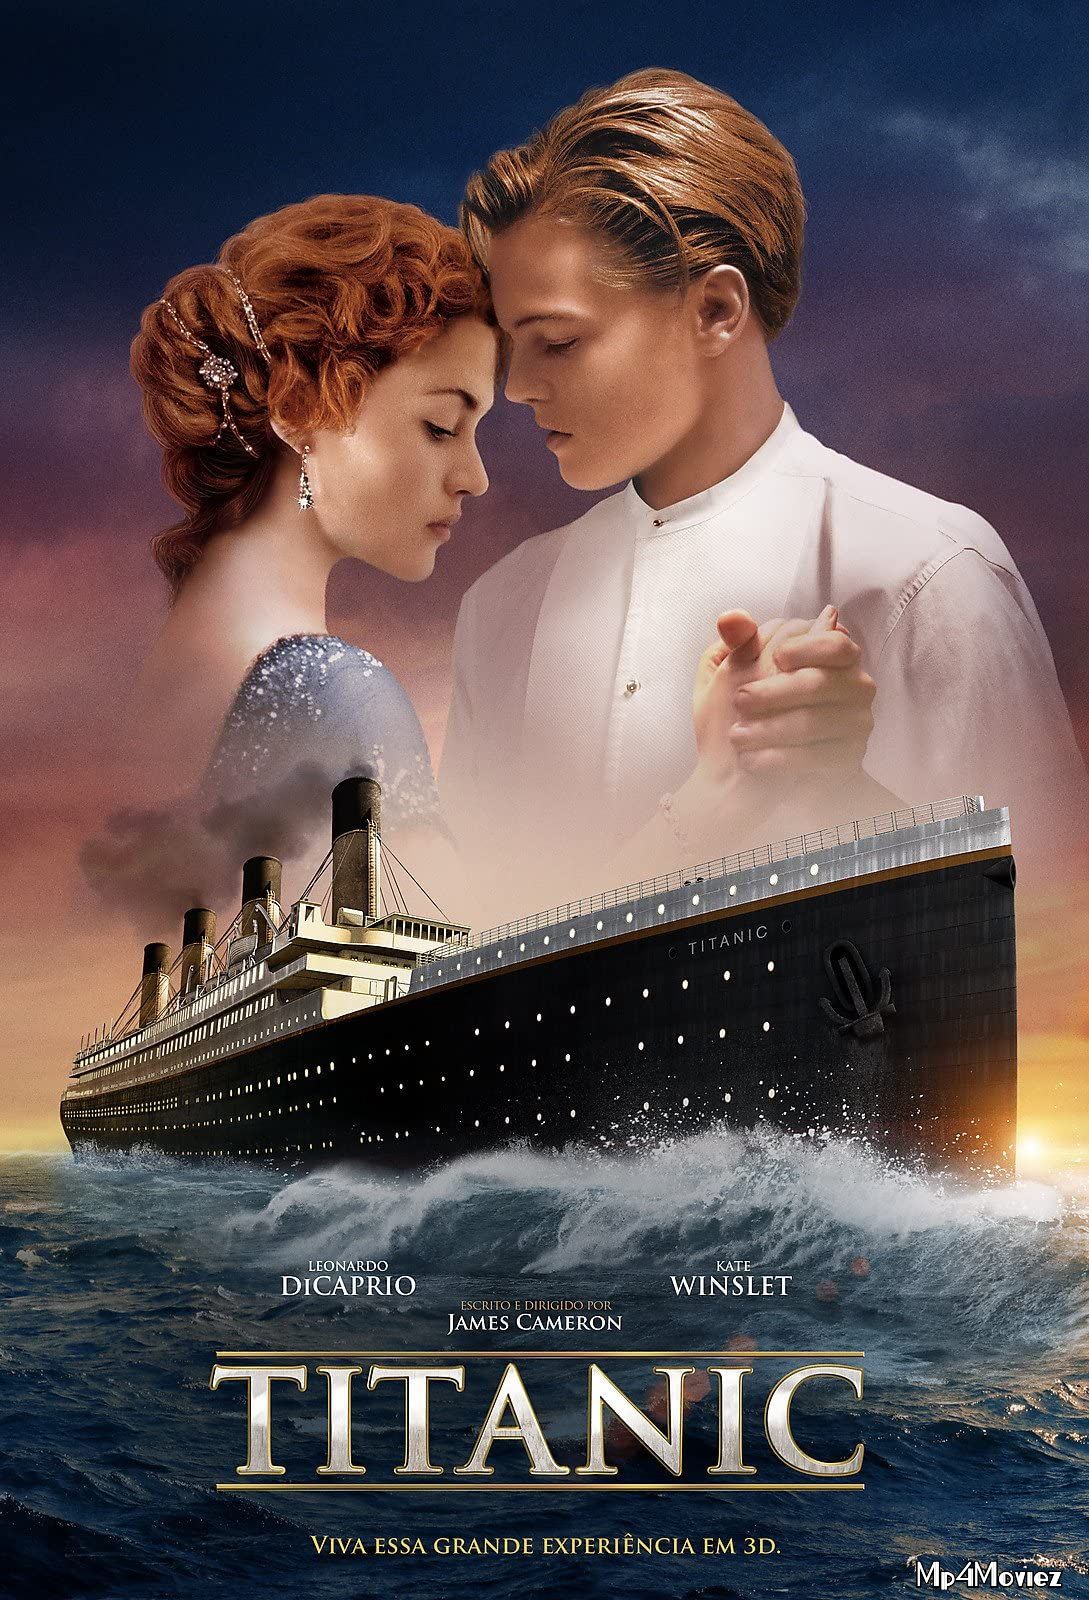 Titanic (1997) Hindi Dubbed BRRip download full movie